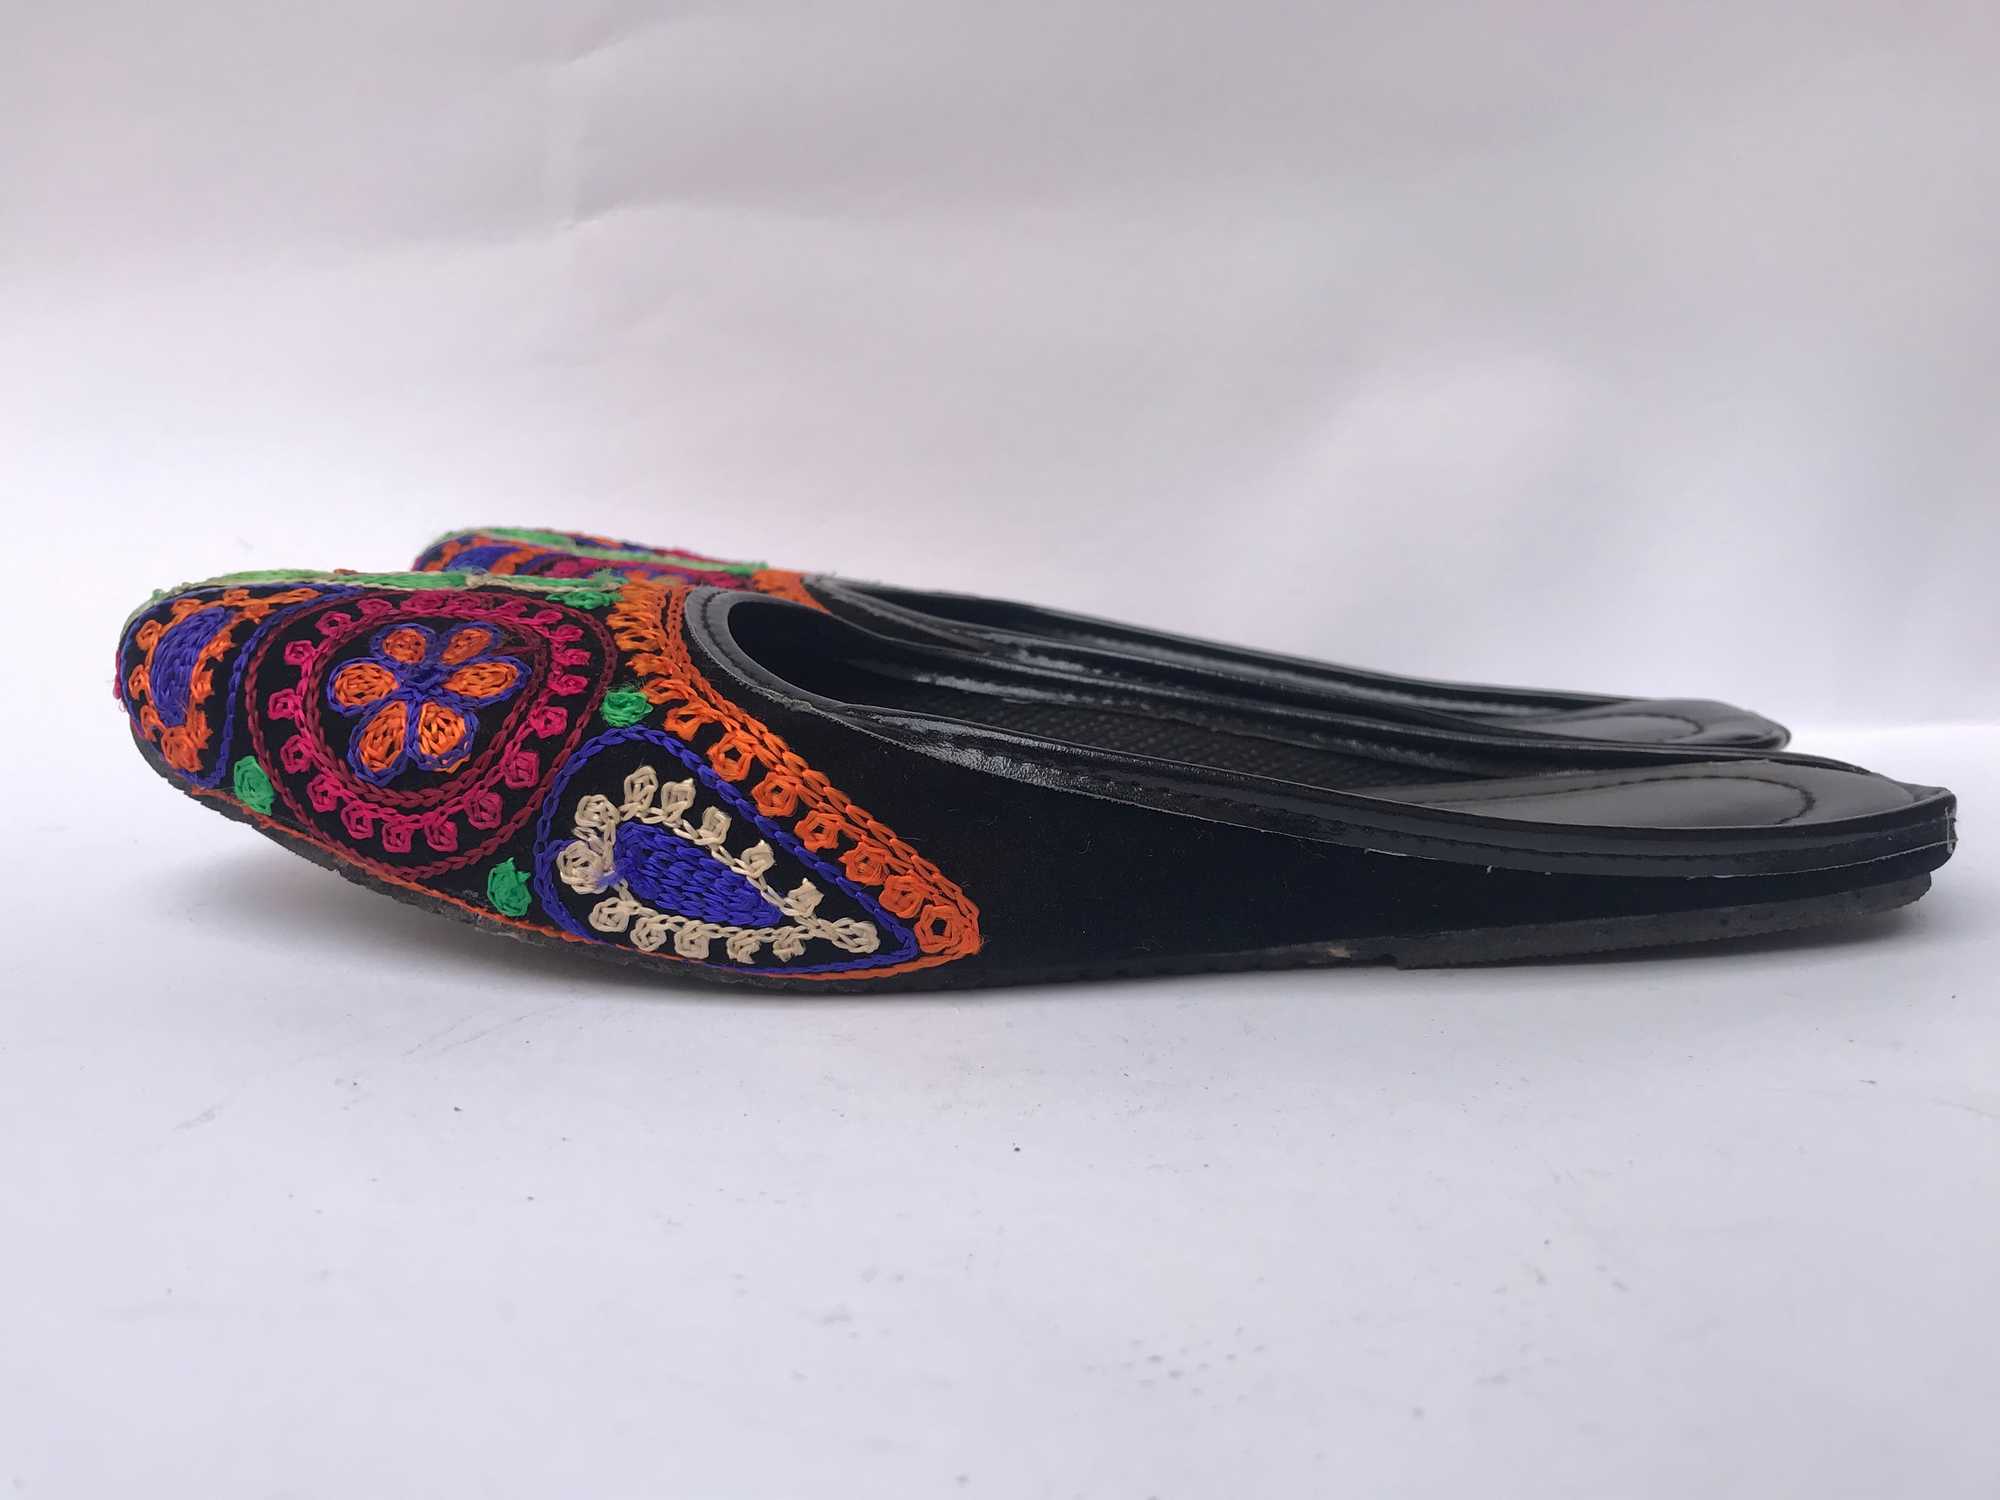 Nepali Handmade Sandals, With Heals And Bead Design